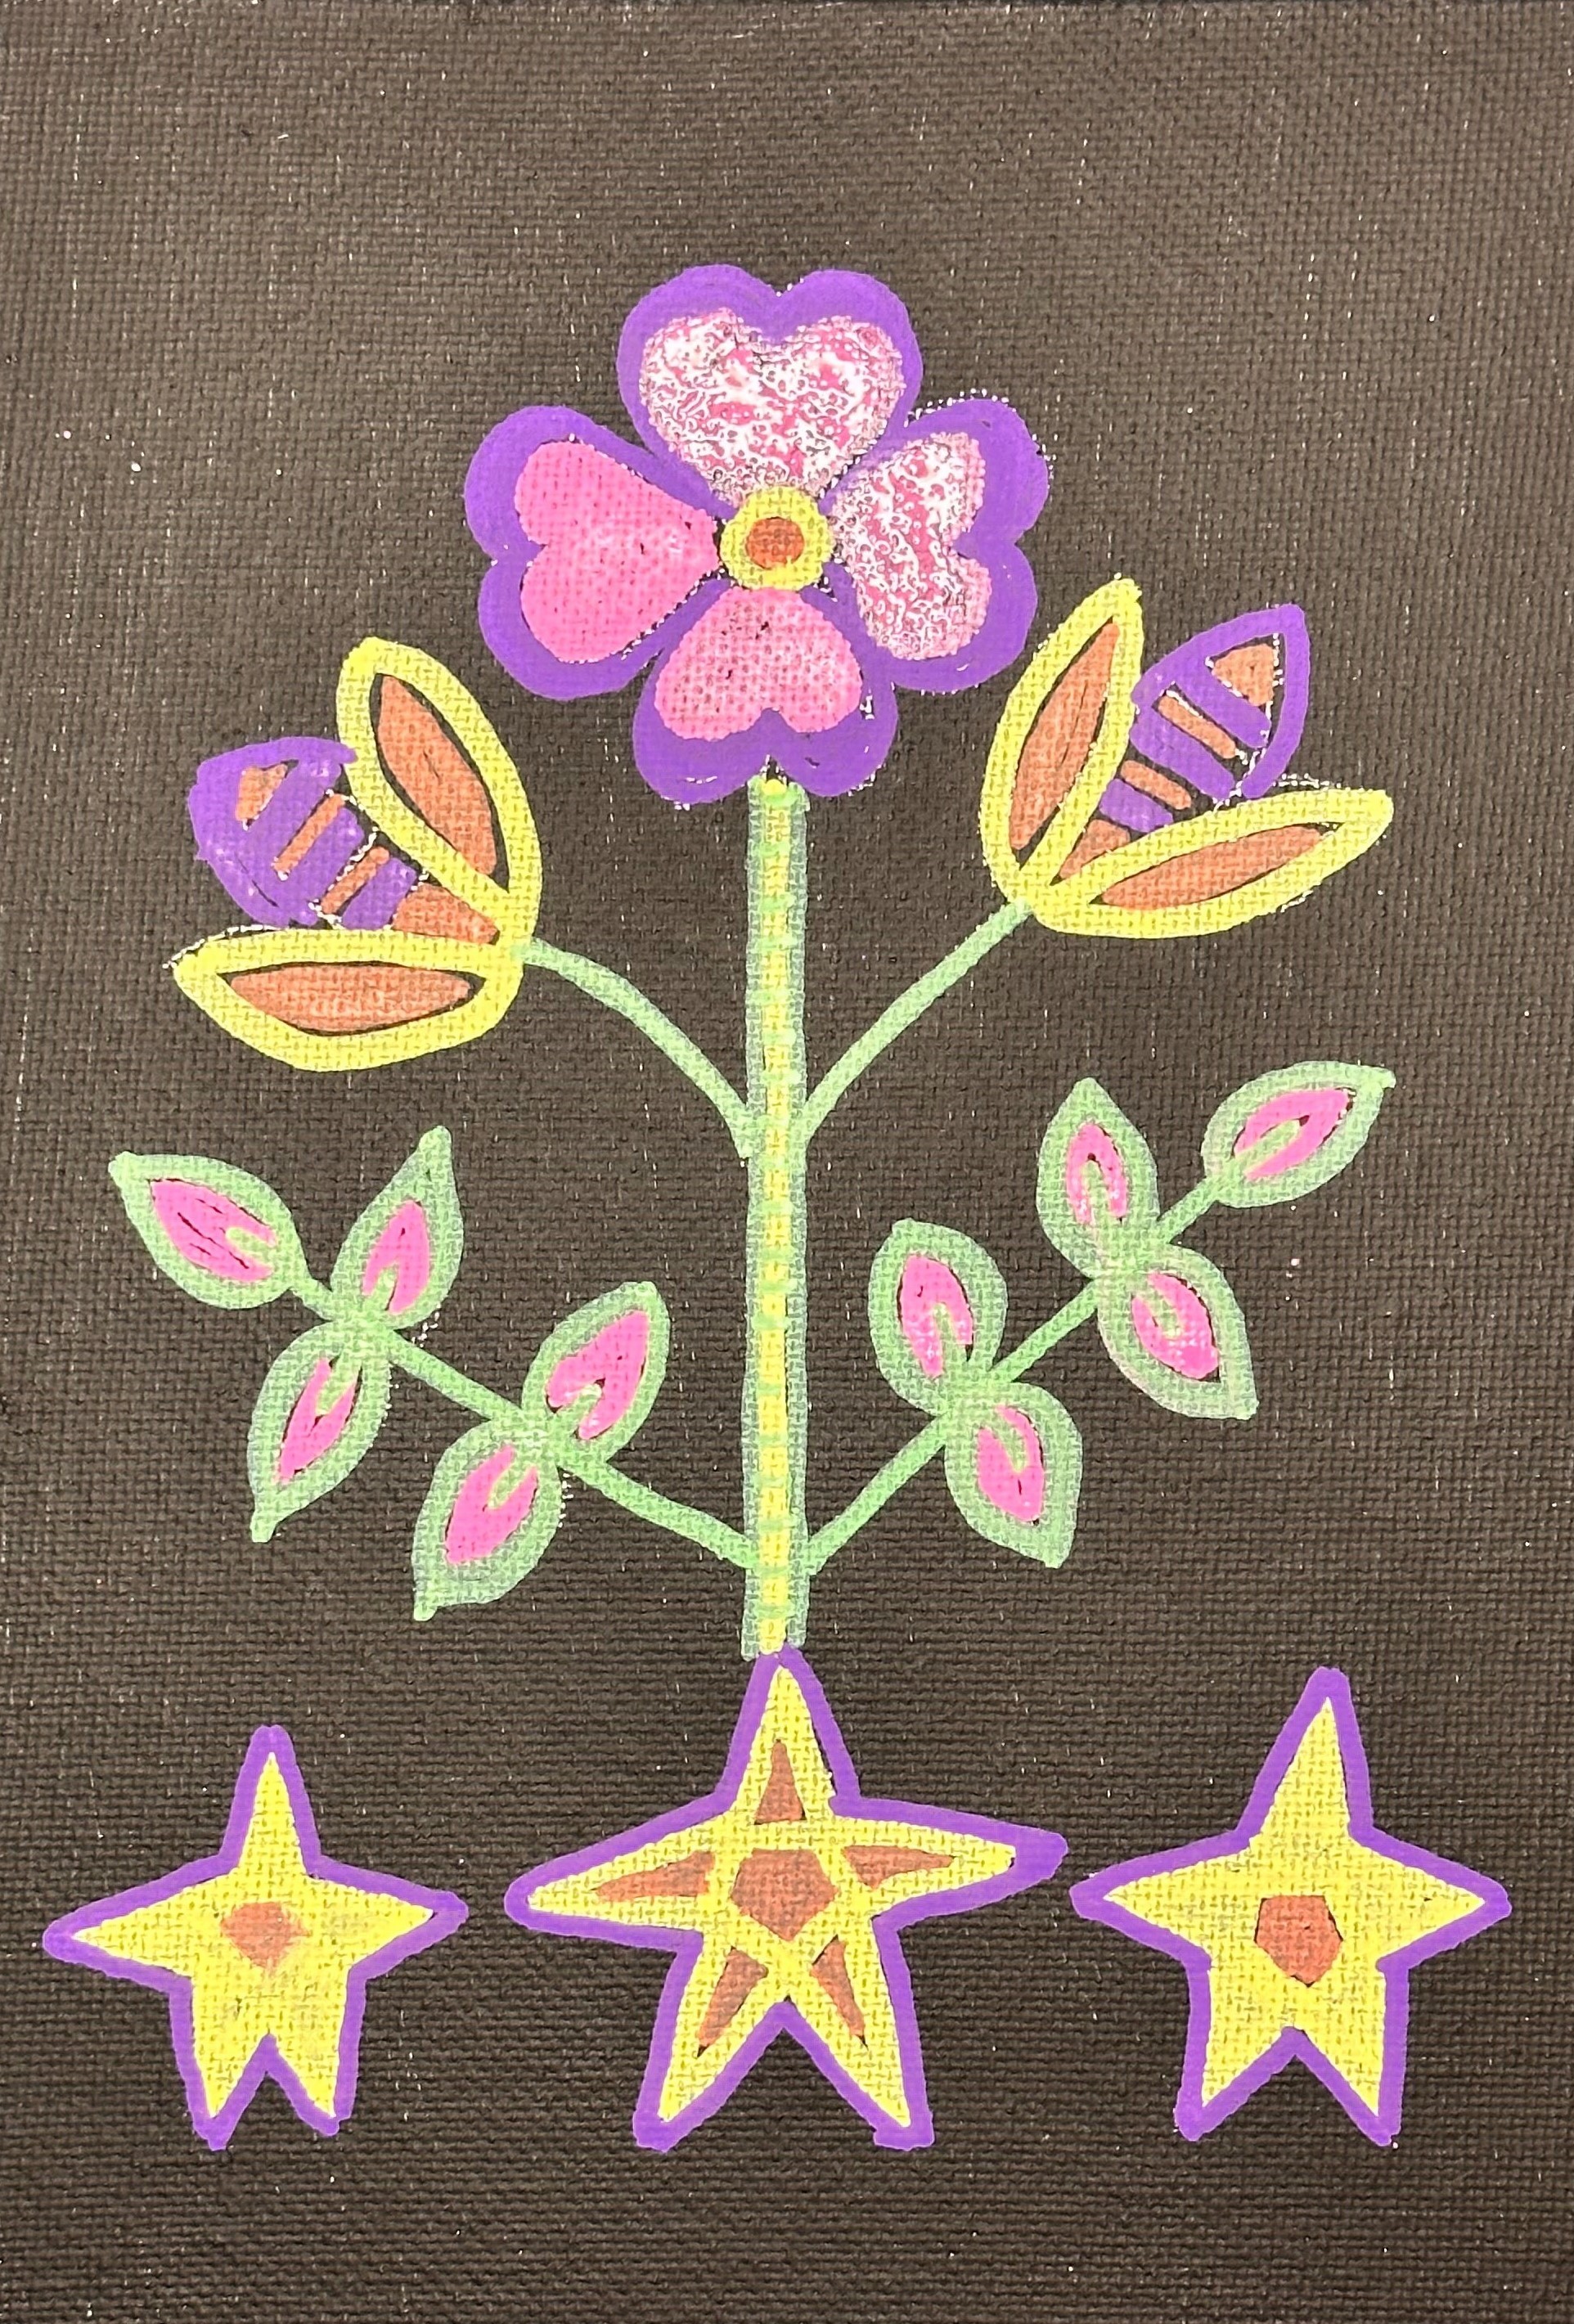 Dakota floral artwork